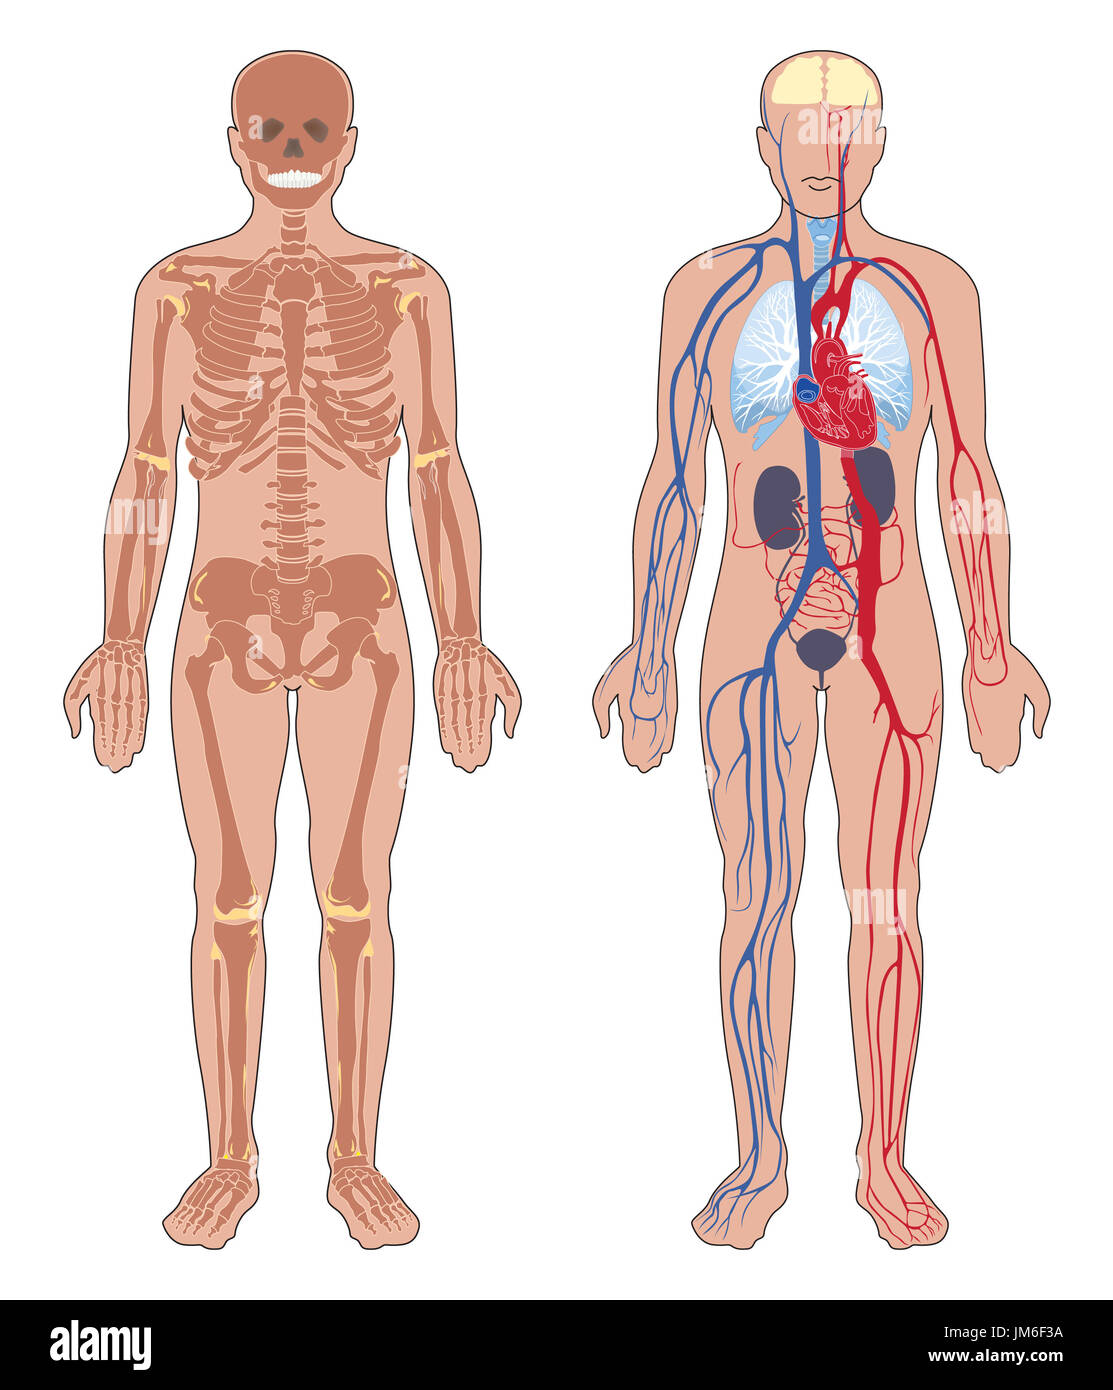 Human anatomy. Set of vector illustration isolated on white